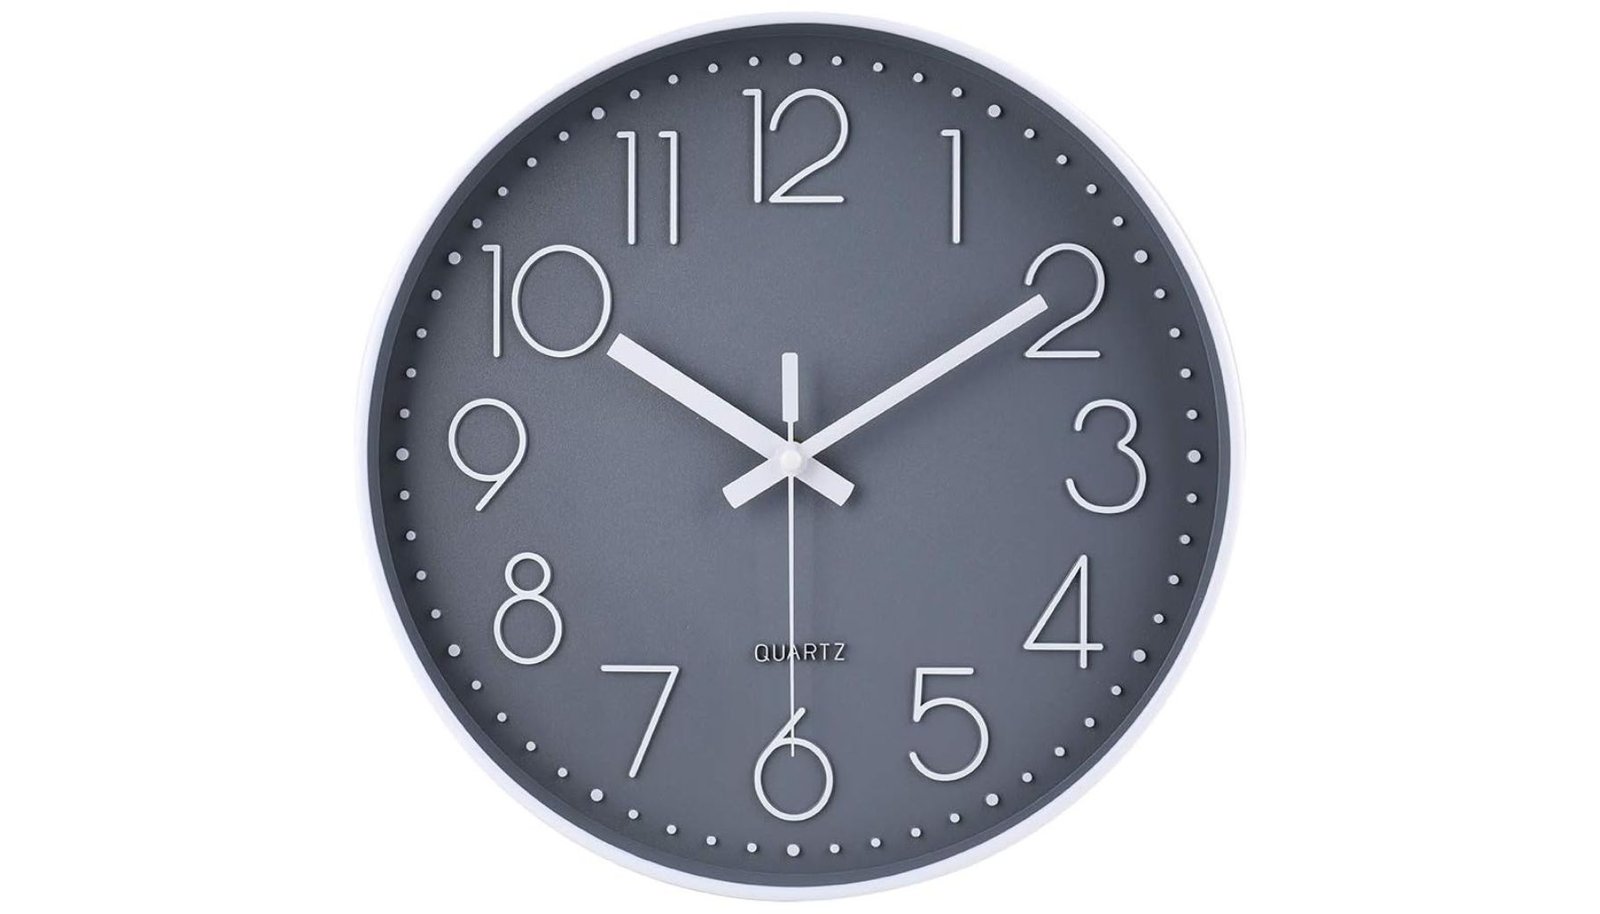 Jomparis 12 Inch Analog Wall Clock Review